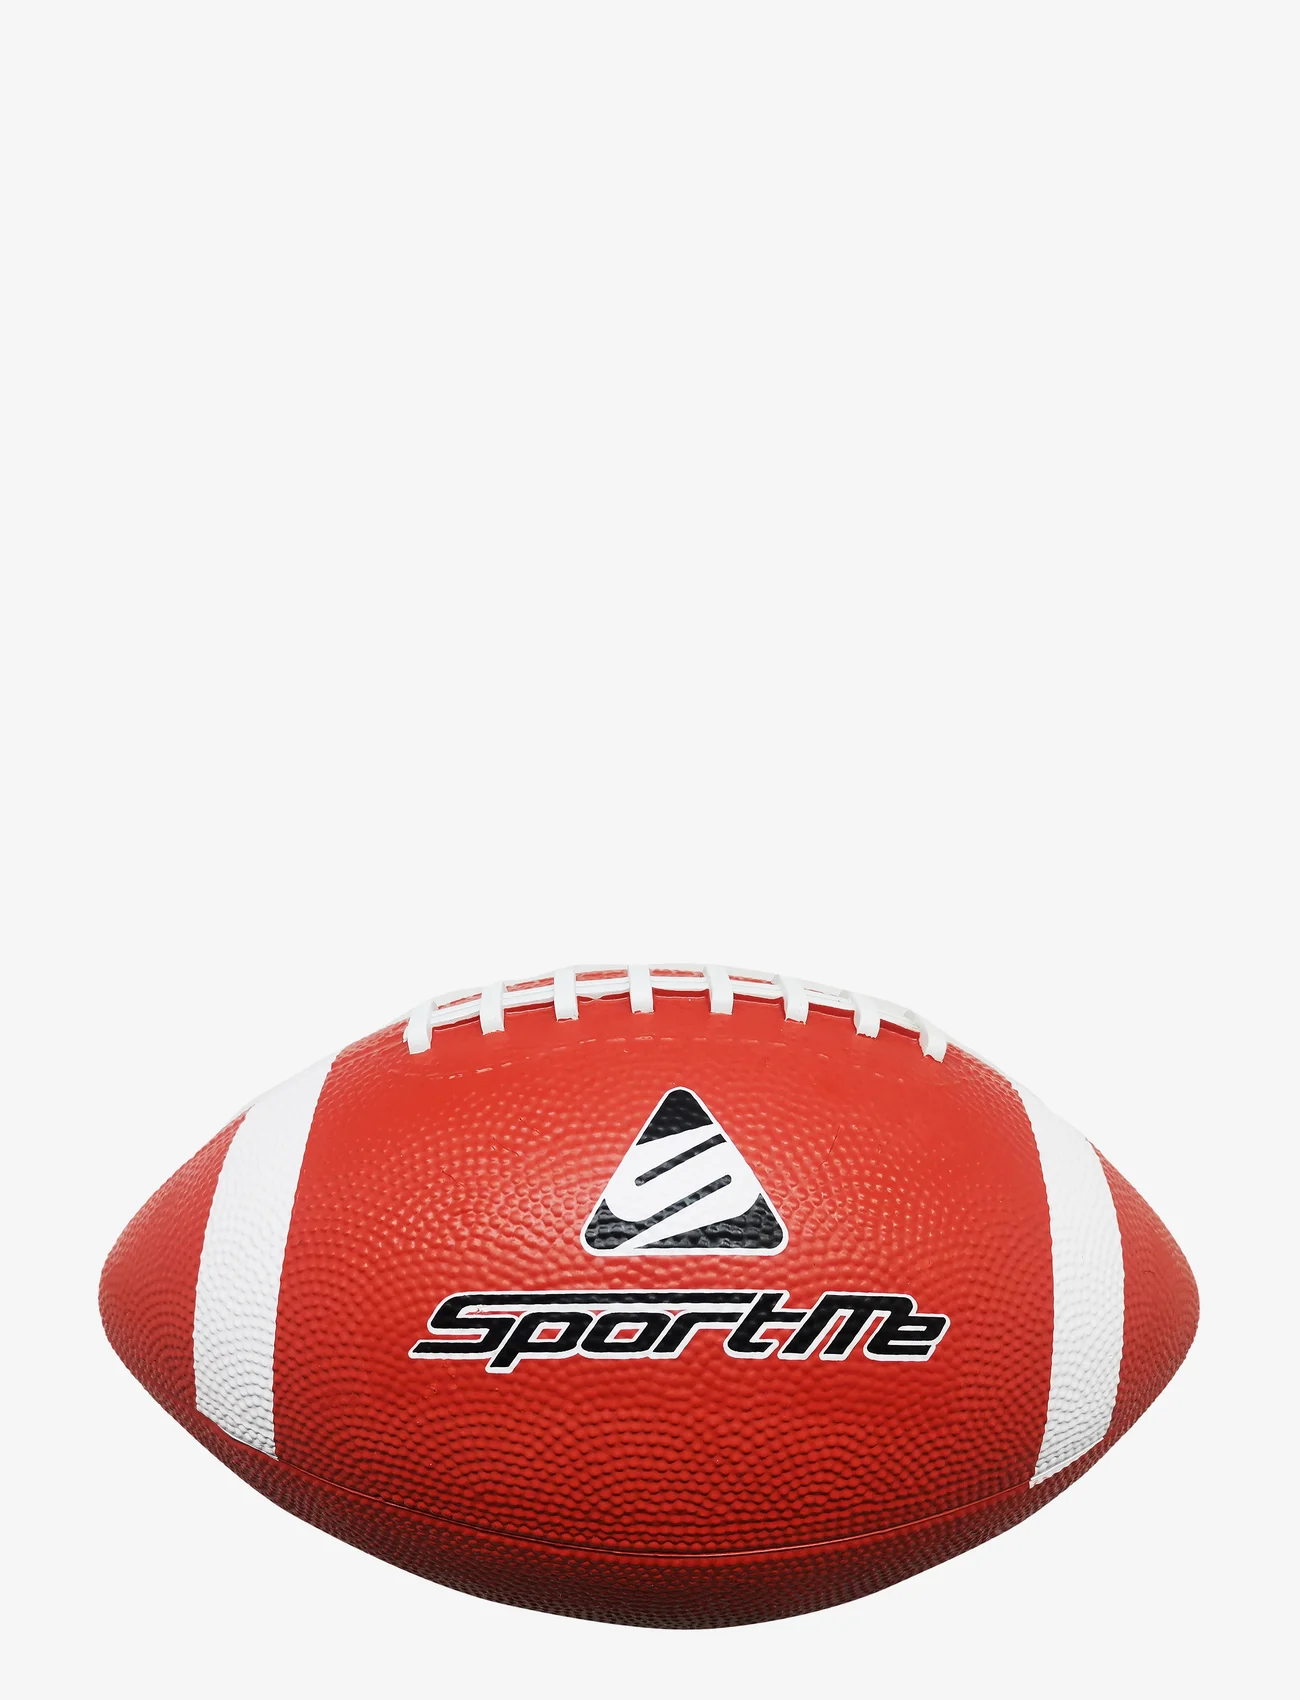 SportMe - American Fotboll Rubber Official - kesälöytöjä - brun - 0